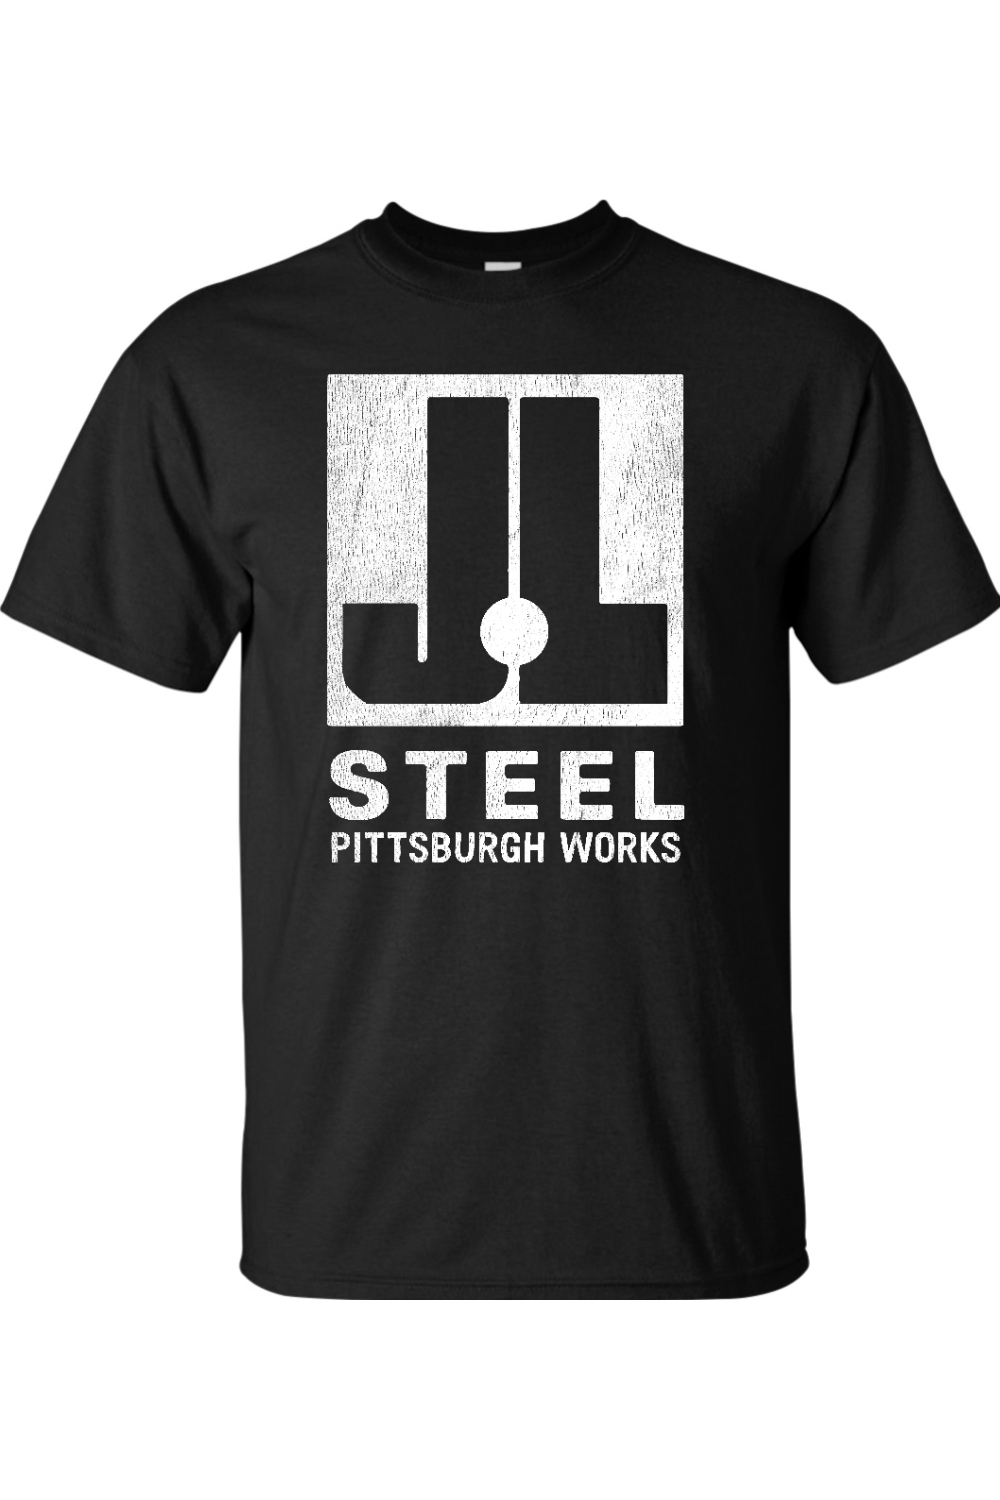 J&L Steel - Pittsburgh Works - Big & Tall Tee - Yinzylvania